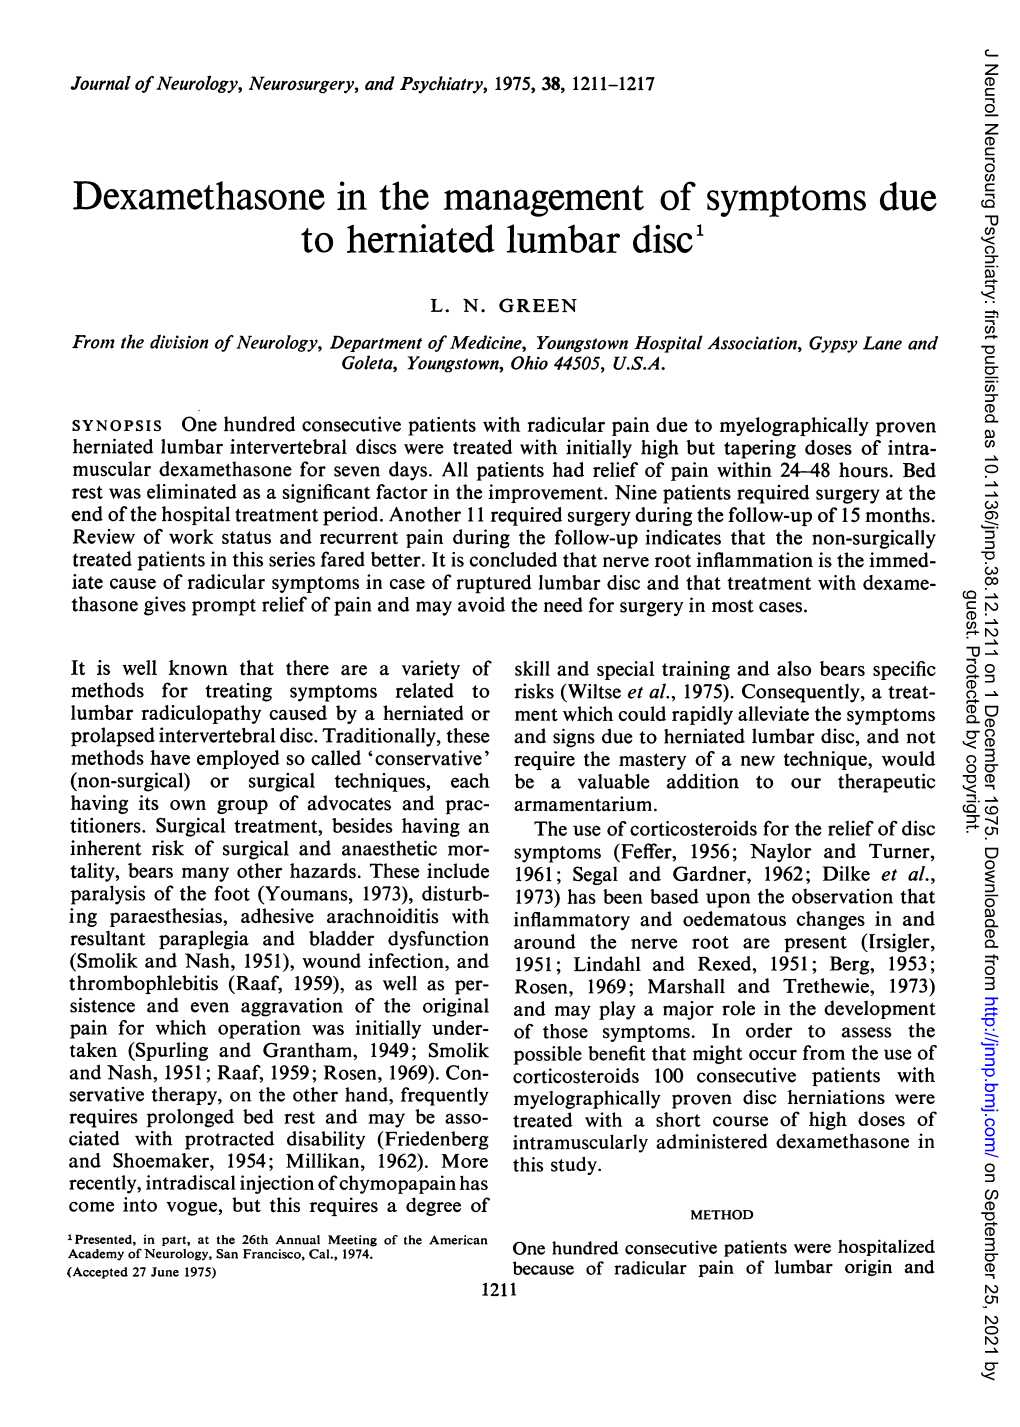 Dexamethasone in the Management of Symptoms Due to Herniated Lumbar Disc'